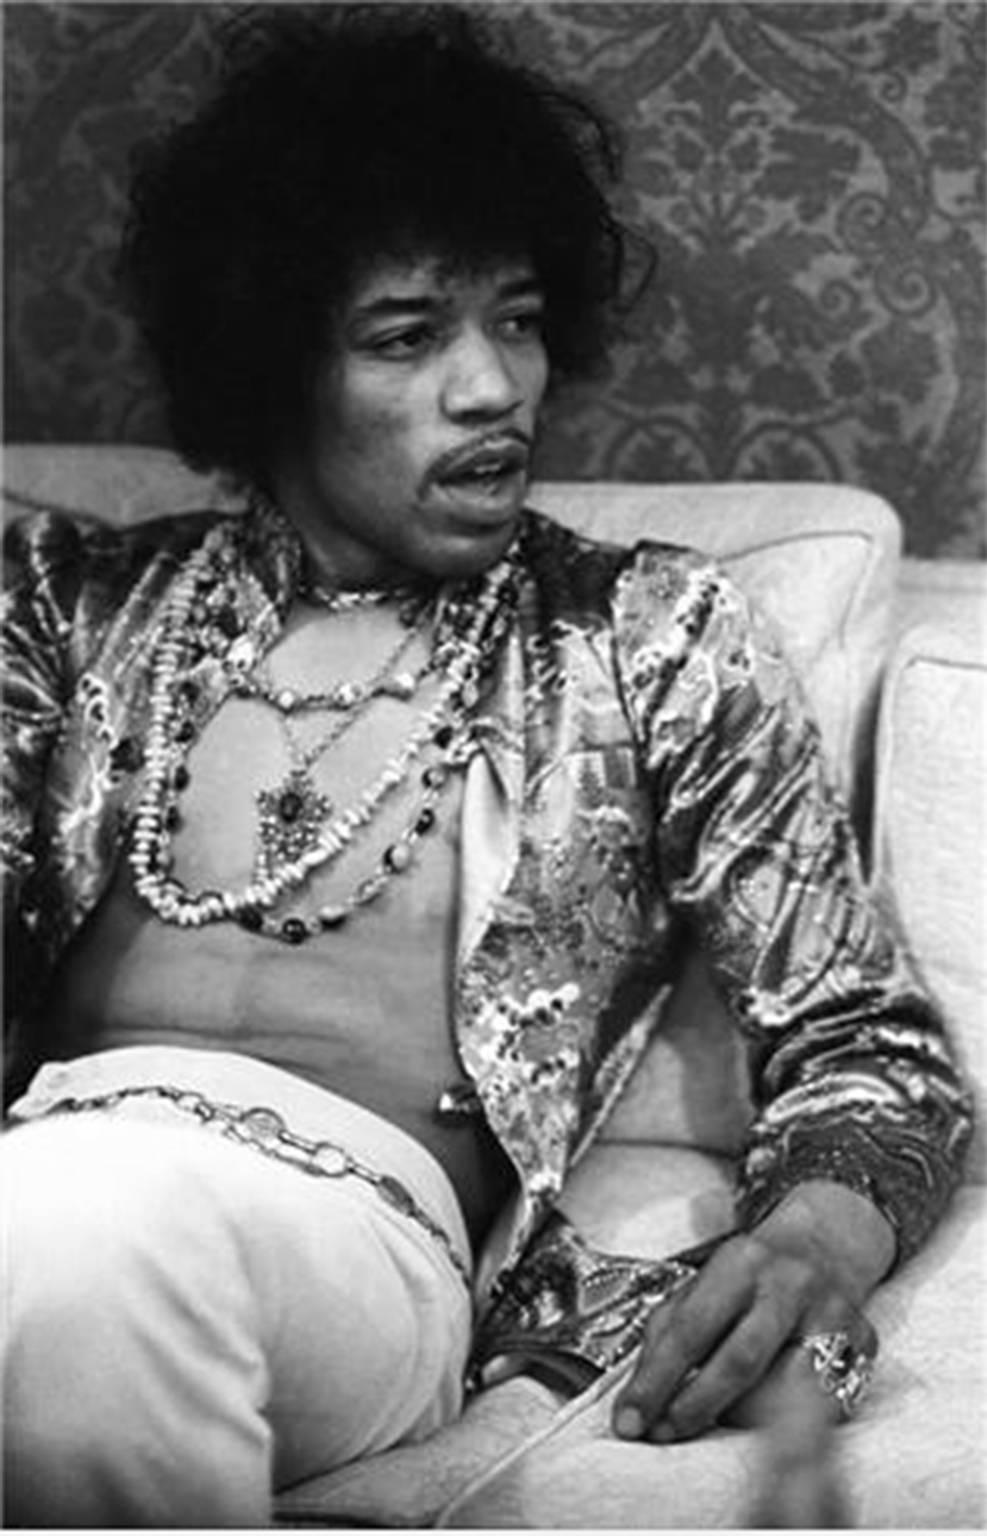 Portrait Photograph Henry Diltz - Jimi Hendrix, Hollywood, en Californie 1967